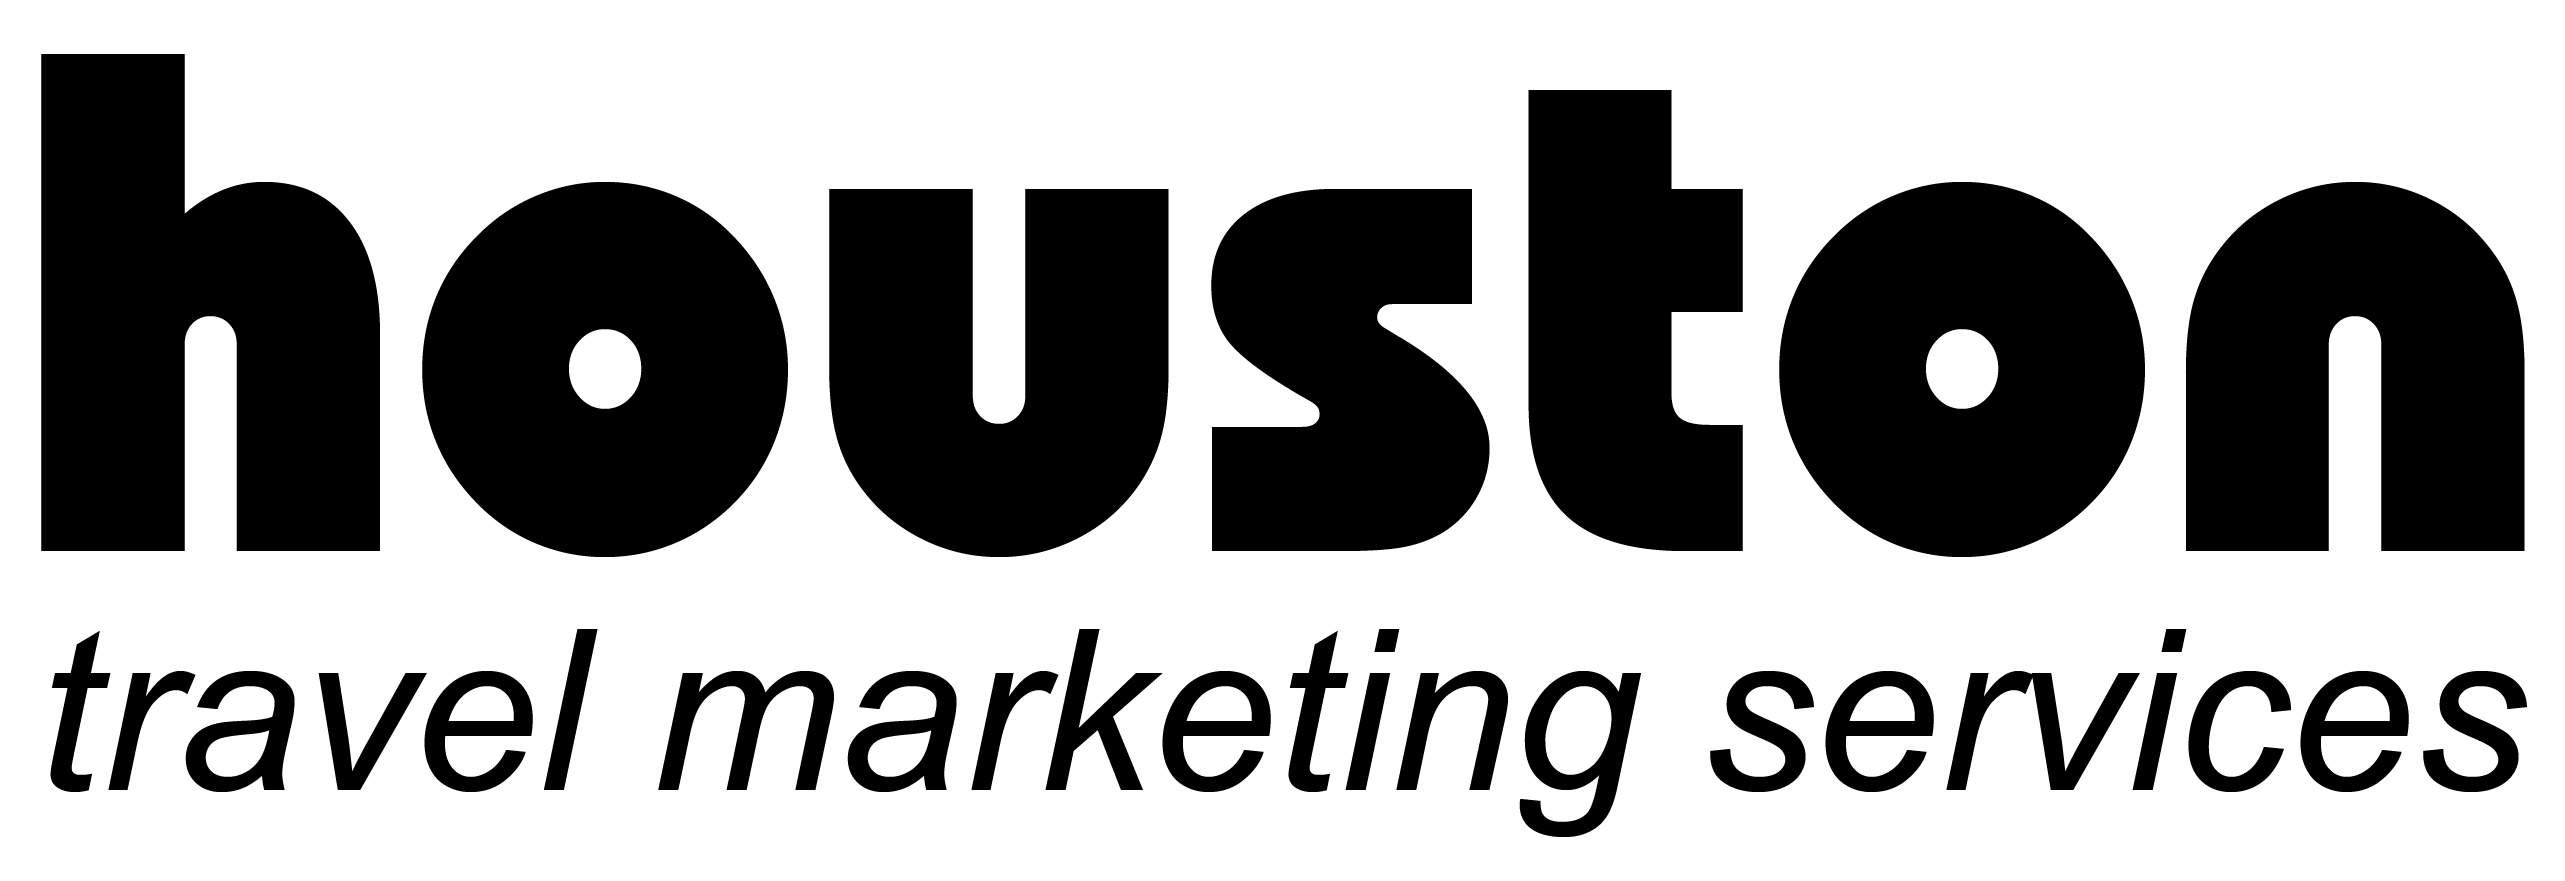 HTMS-Logo-text-black-1